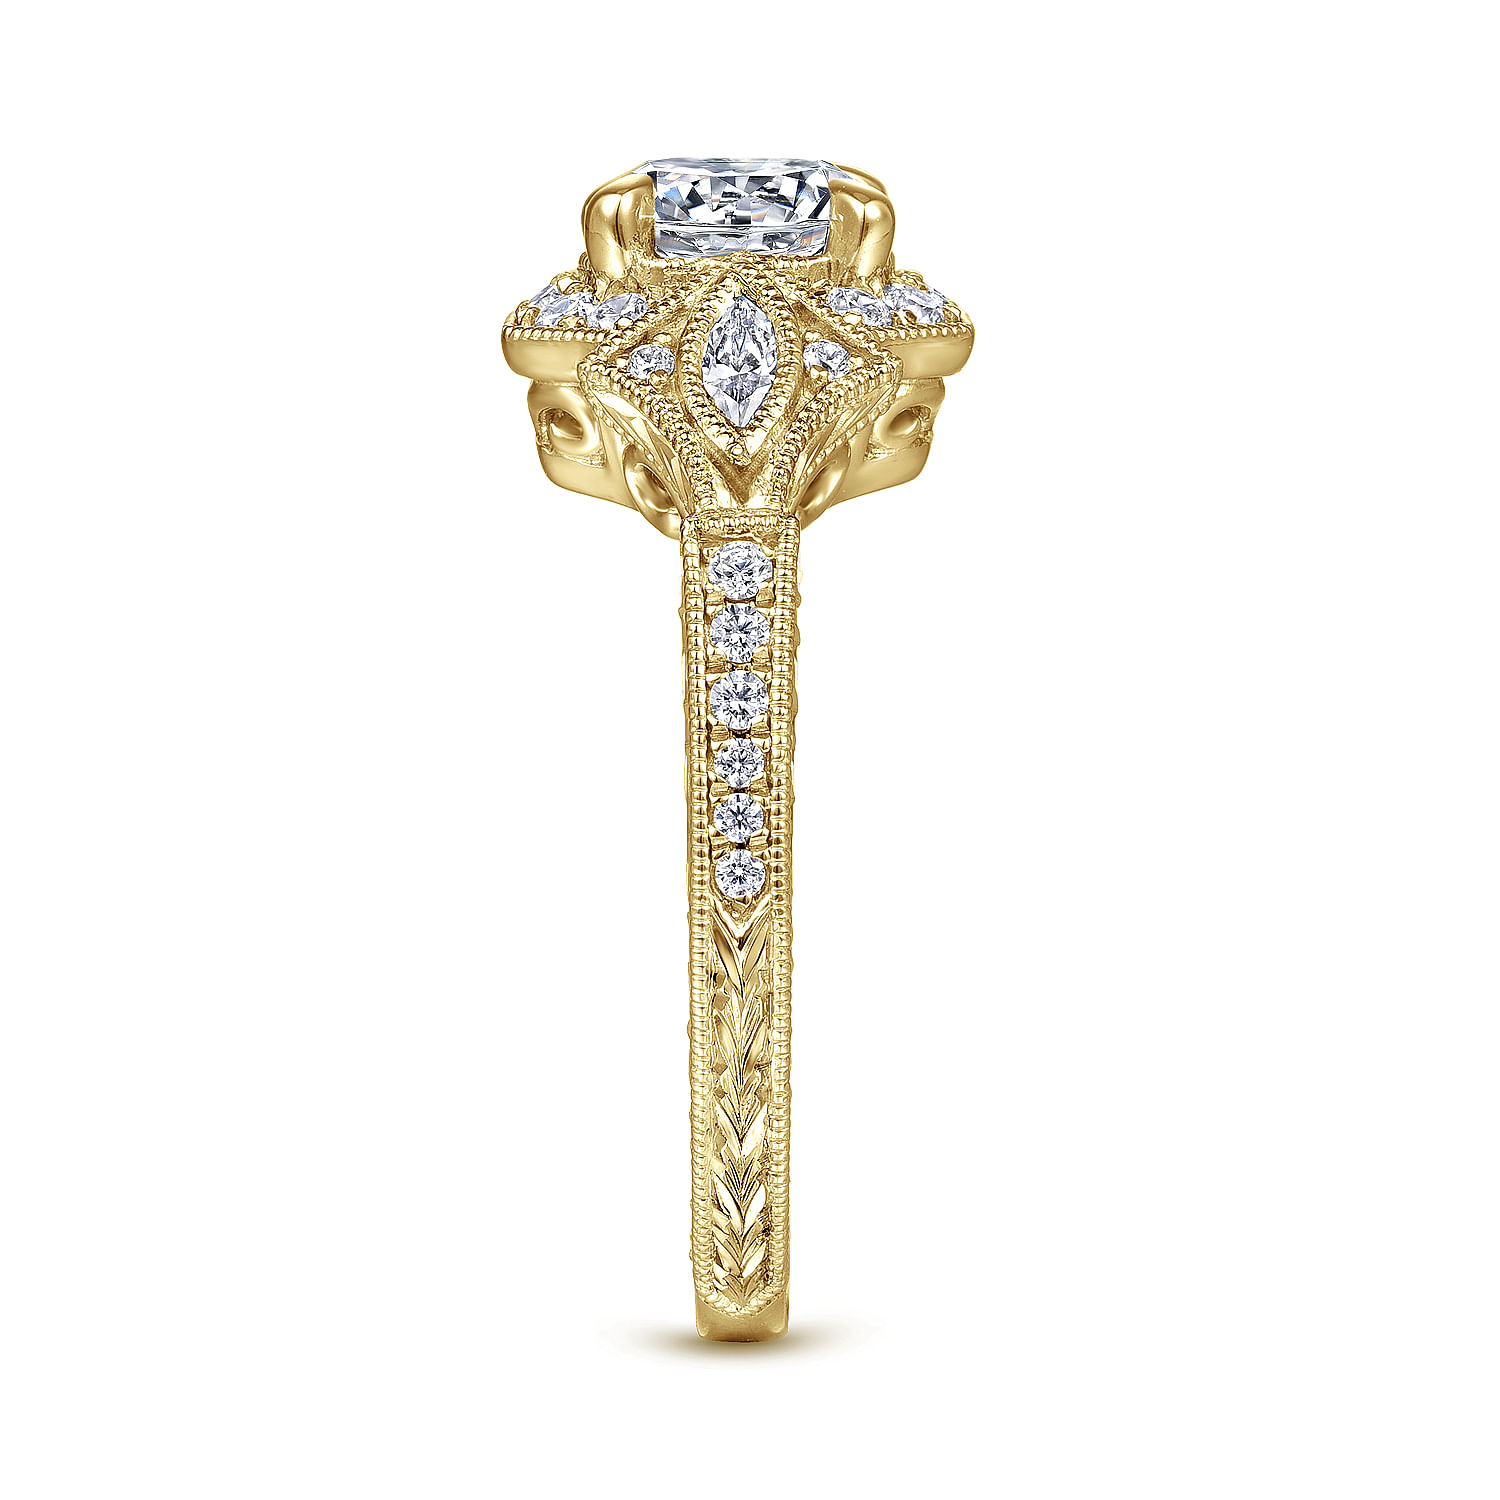 Art Deco 14K Yellow Gold Round Halo Diamond Engagement Ring